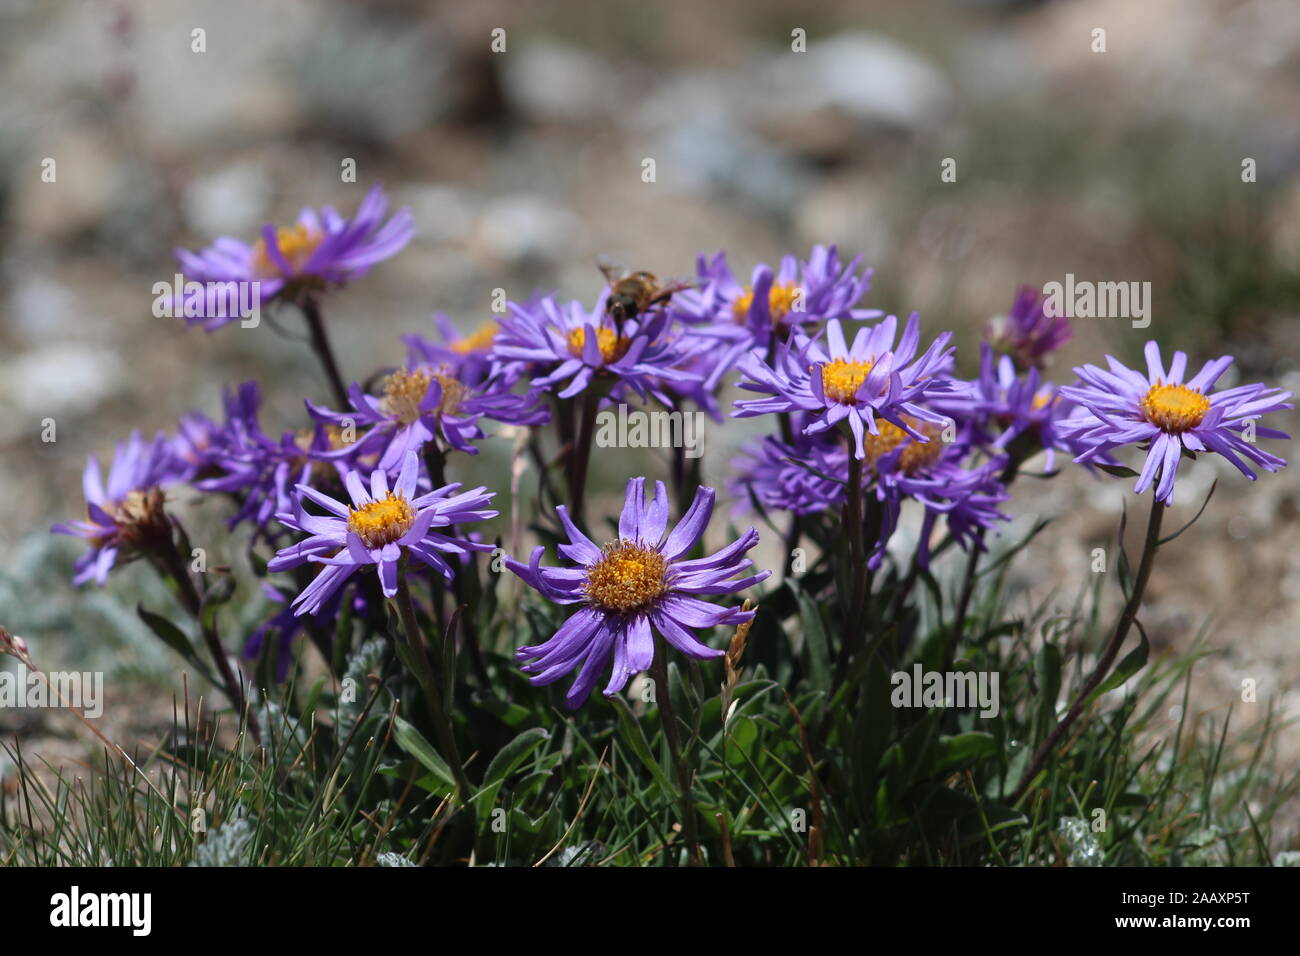 flowers with unsharp stone background Stock Photo